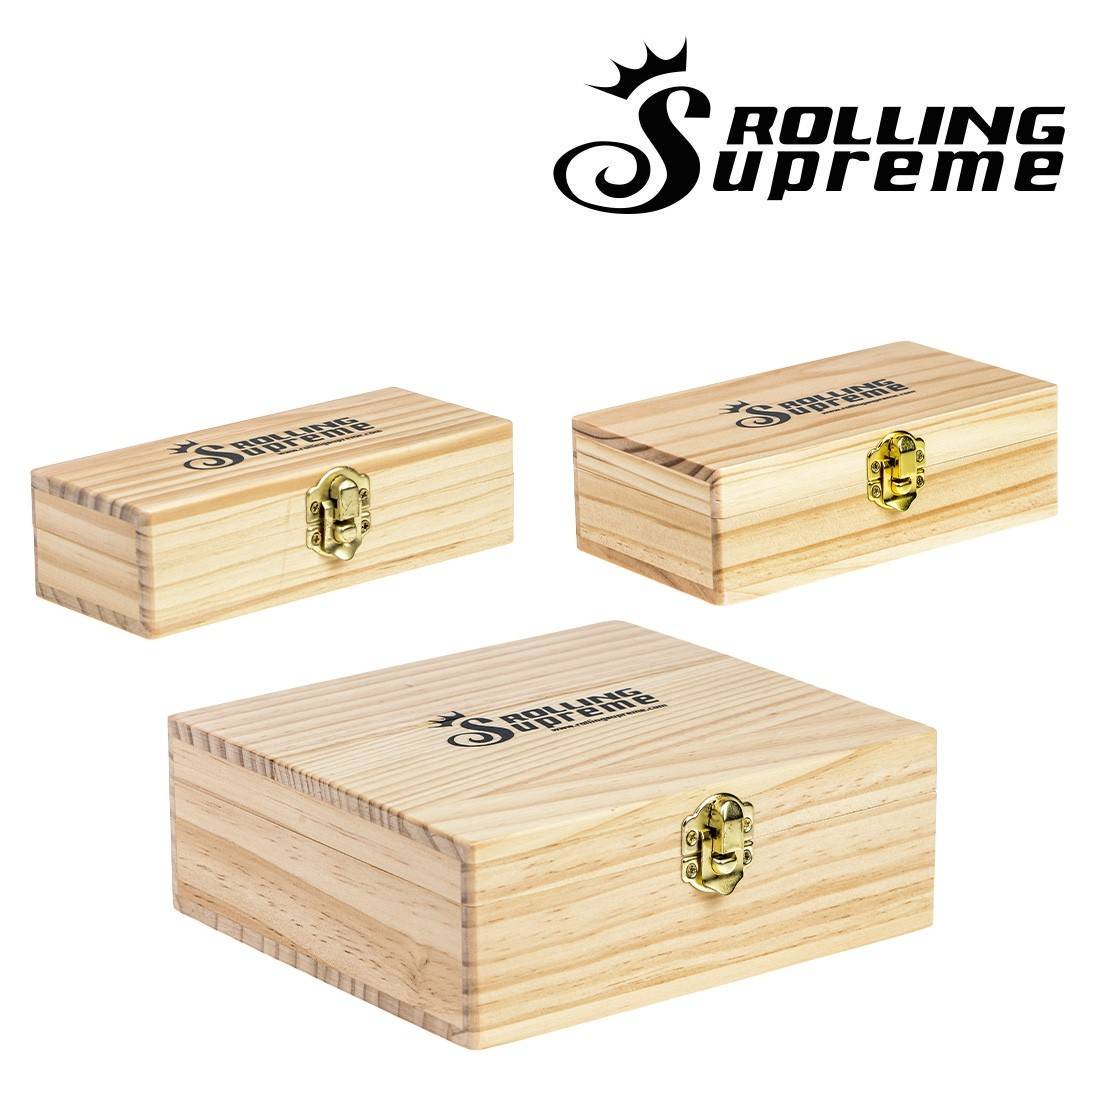 Spliff Box Rolling Supreme, Boite de rangement fumeur